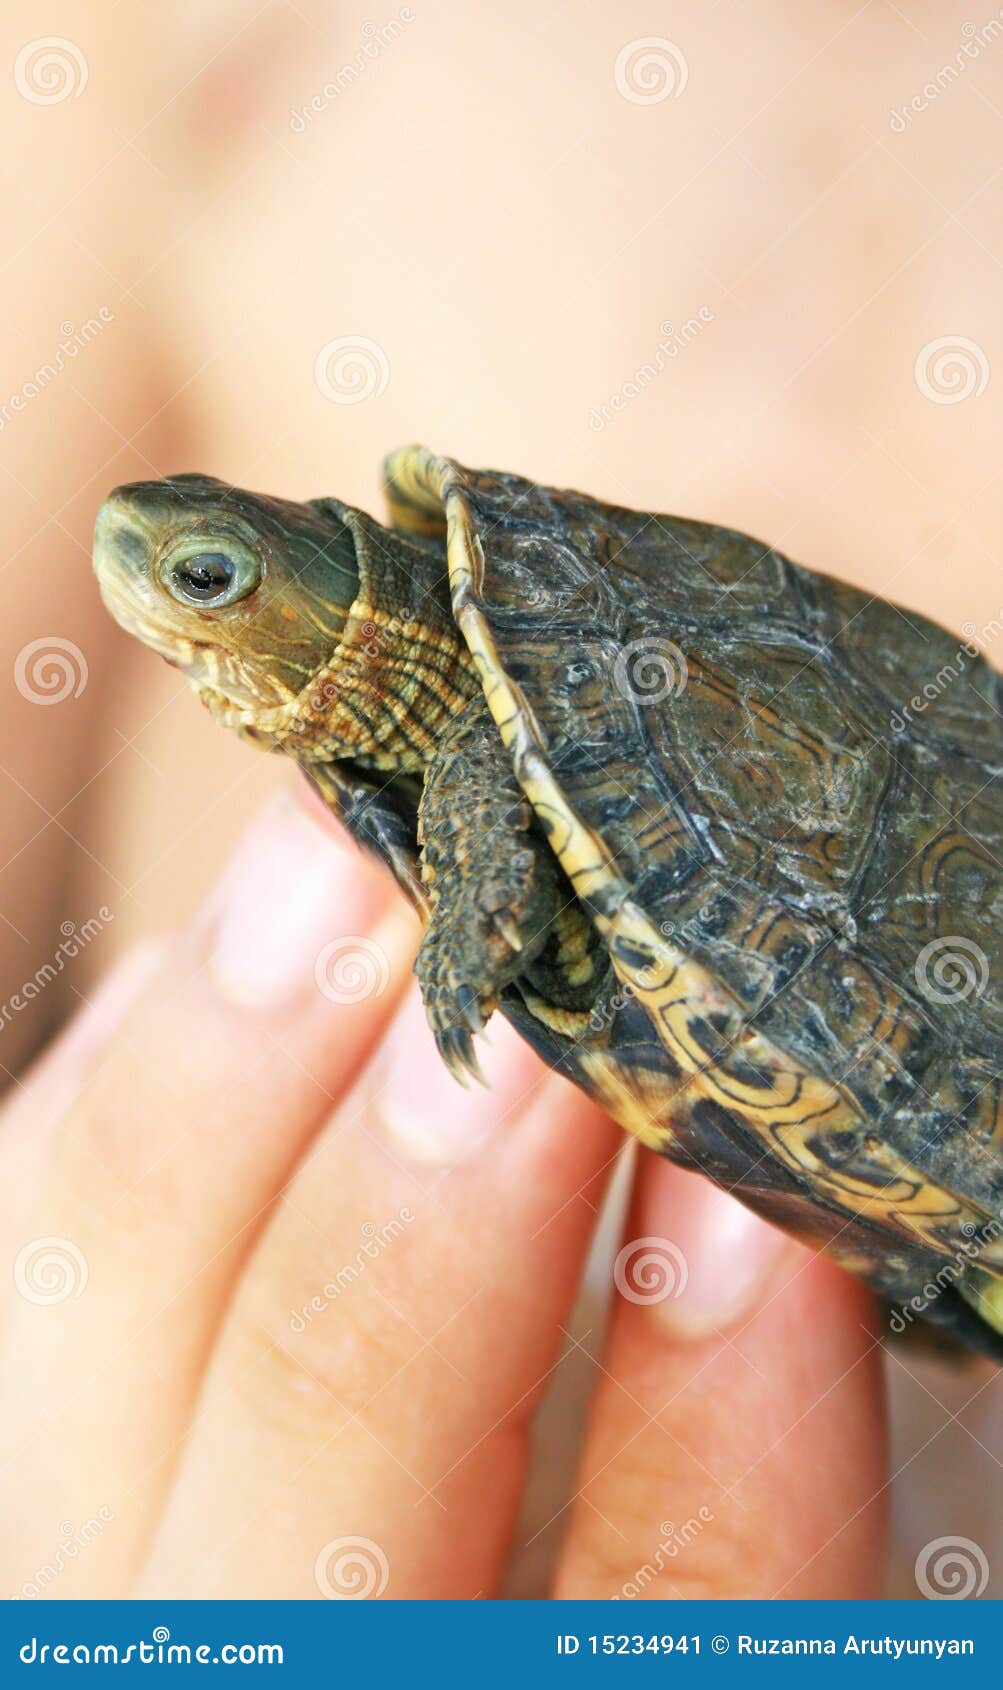 बीस नाखुन वाले कछुए की सच्चाई। 20 nakhun wala kachhua। turtle black magic  in india। tortoise 🐢 - YouTube